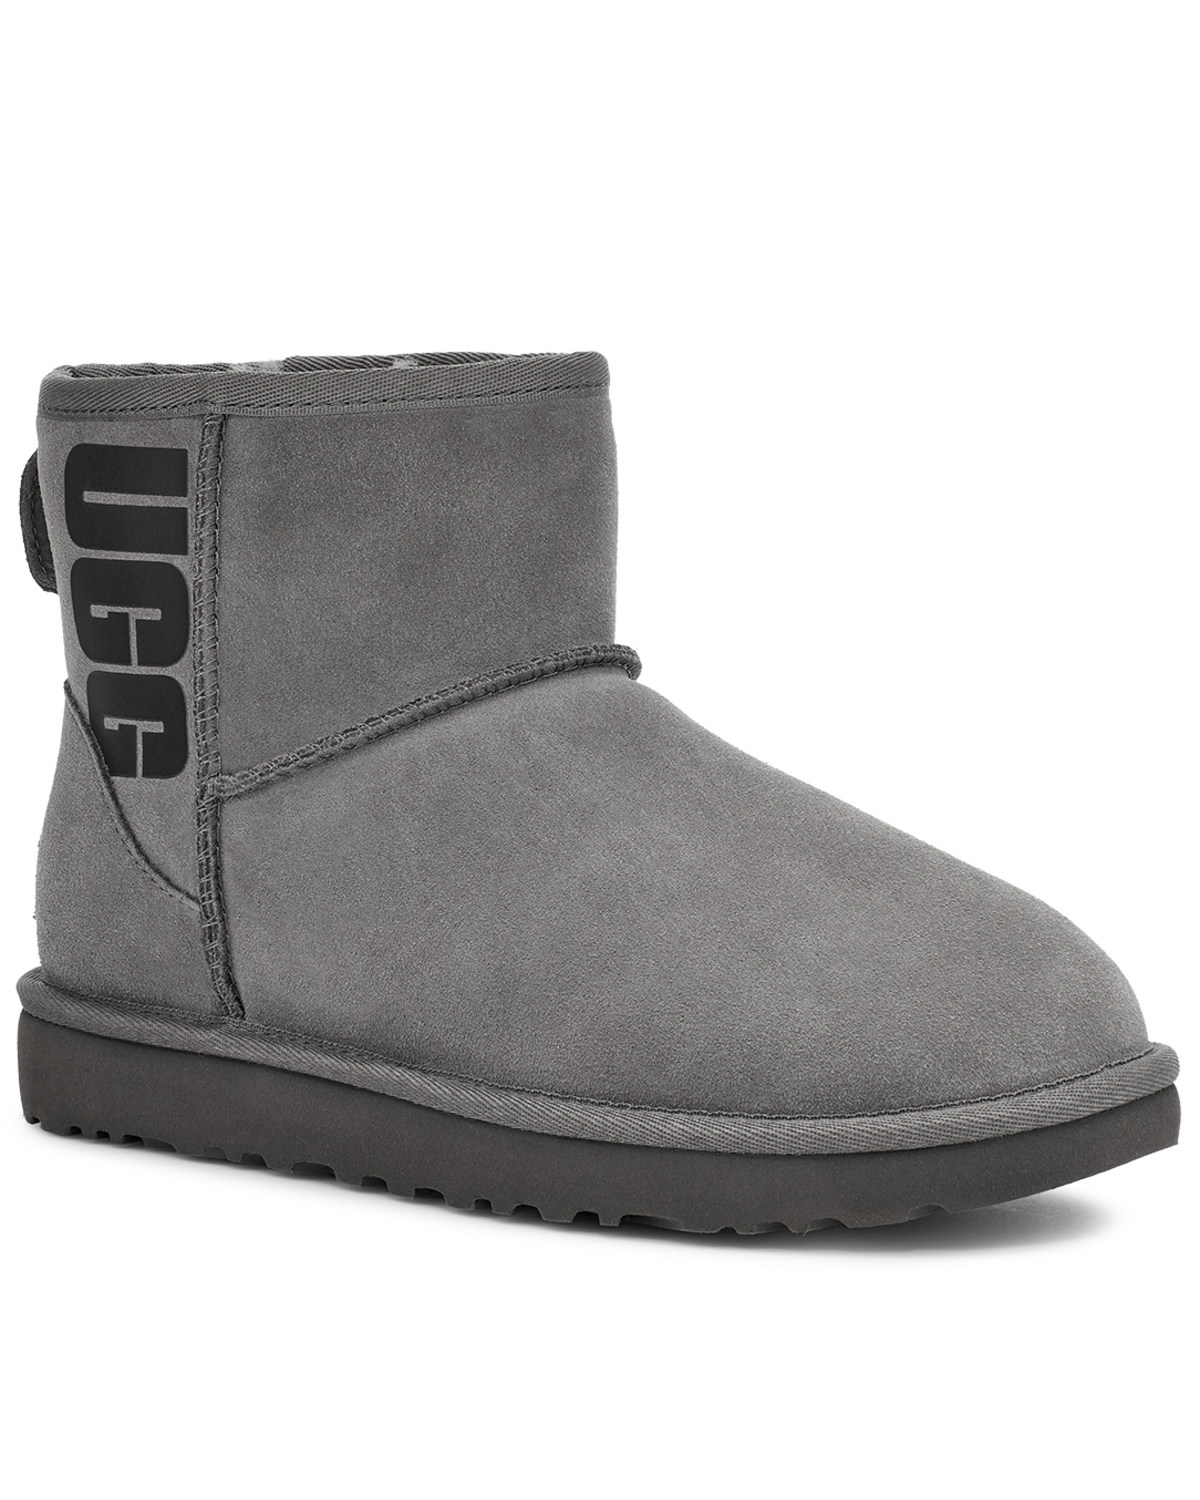 grey ugg boots cheap